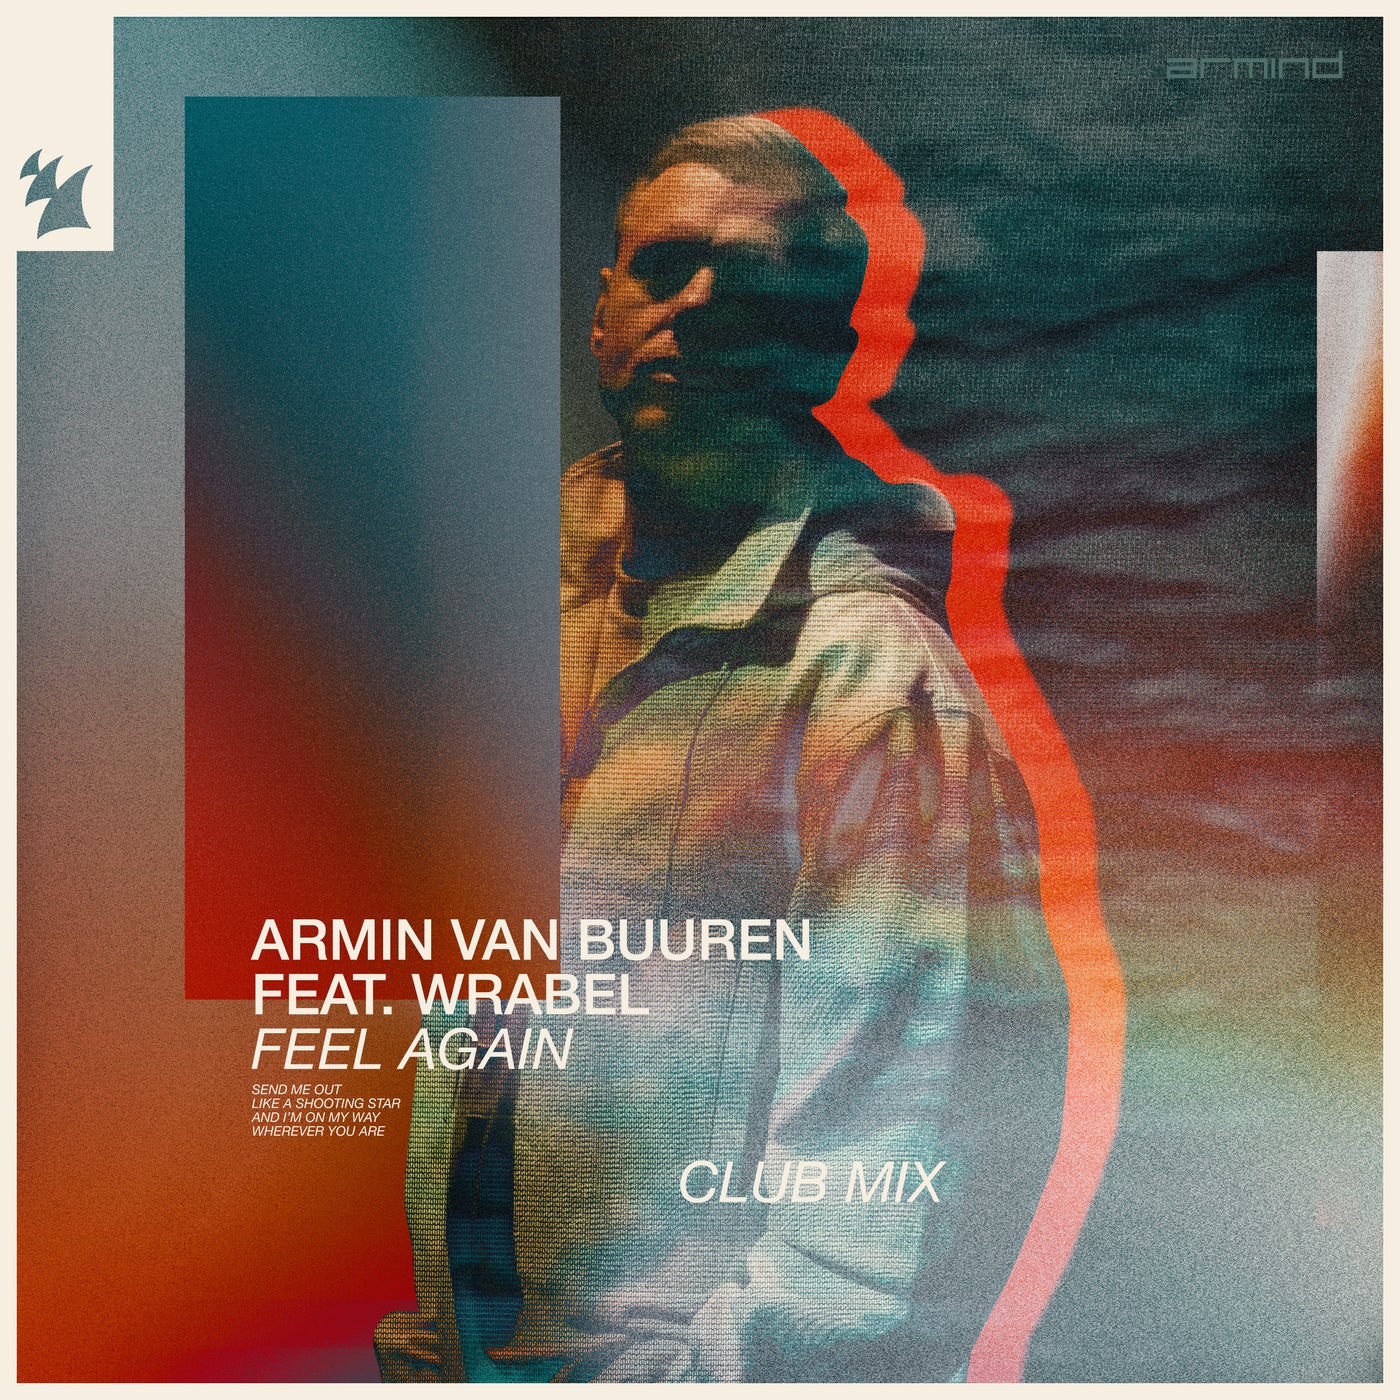 Armin van Buuren featuring Wrabel — Feel Again (Club Mix) cover artwork